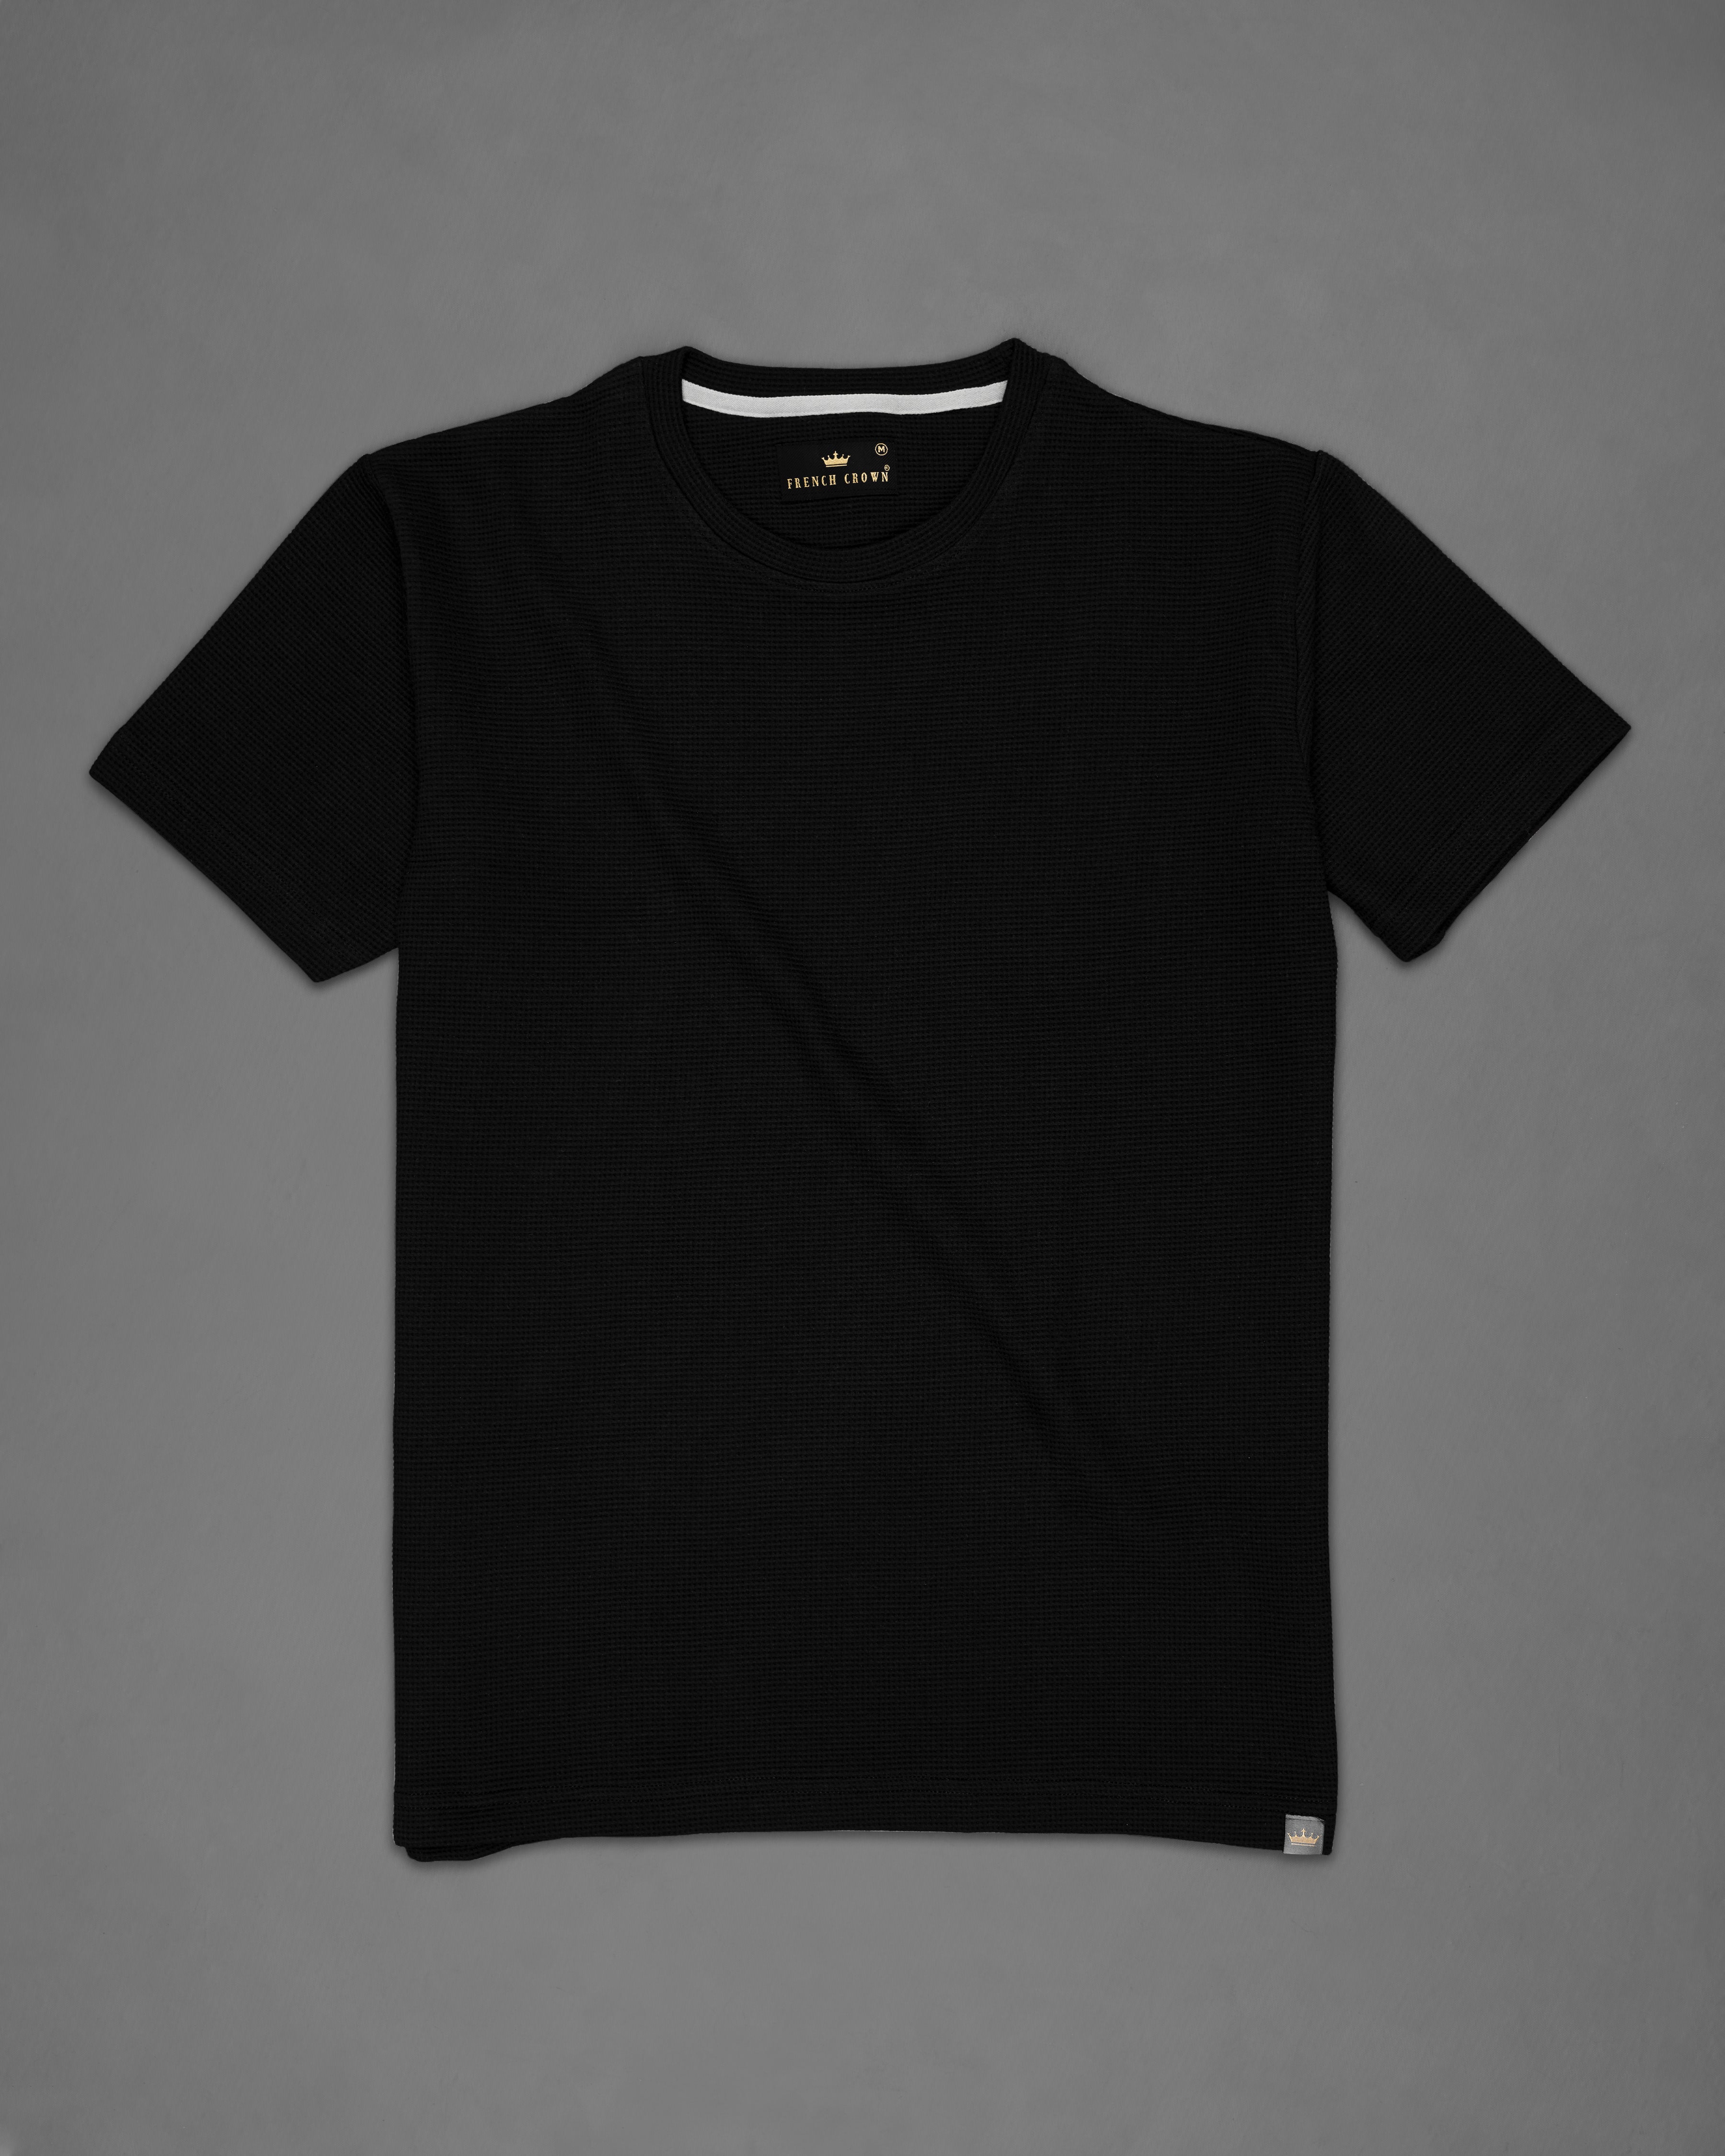 Jade Black Premium Cotton T-shirt with Shorts Combo TS764-SR174-S, TS764-SR174-M, TS764-SR174-L, TS764-SR174-XL, TS764-SR174-XXL